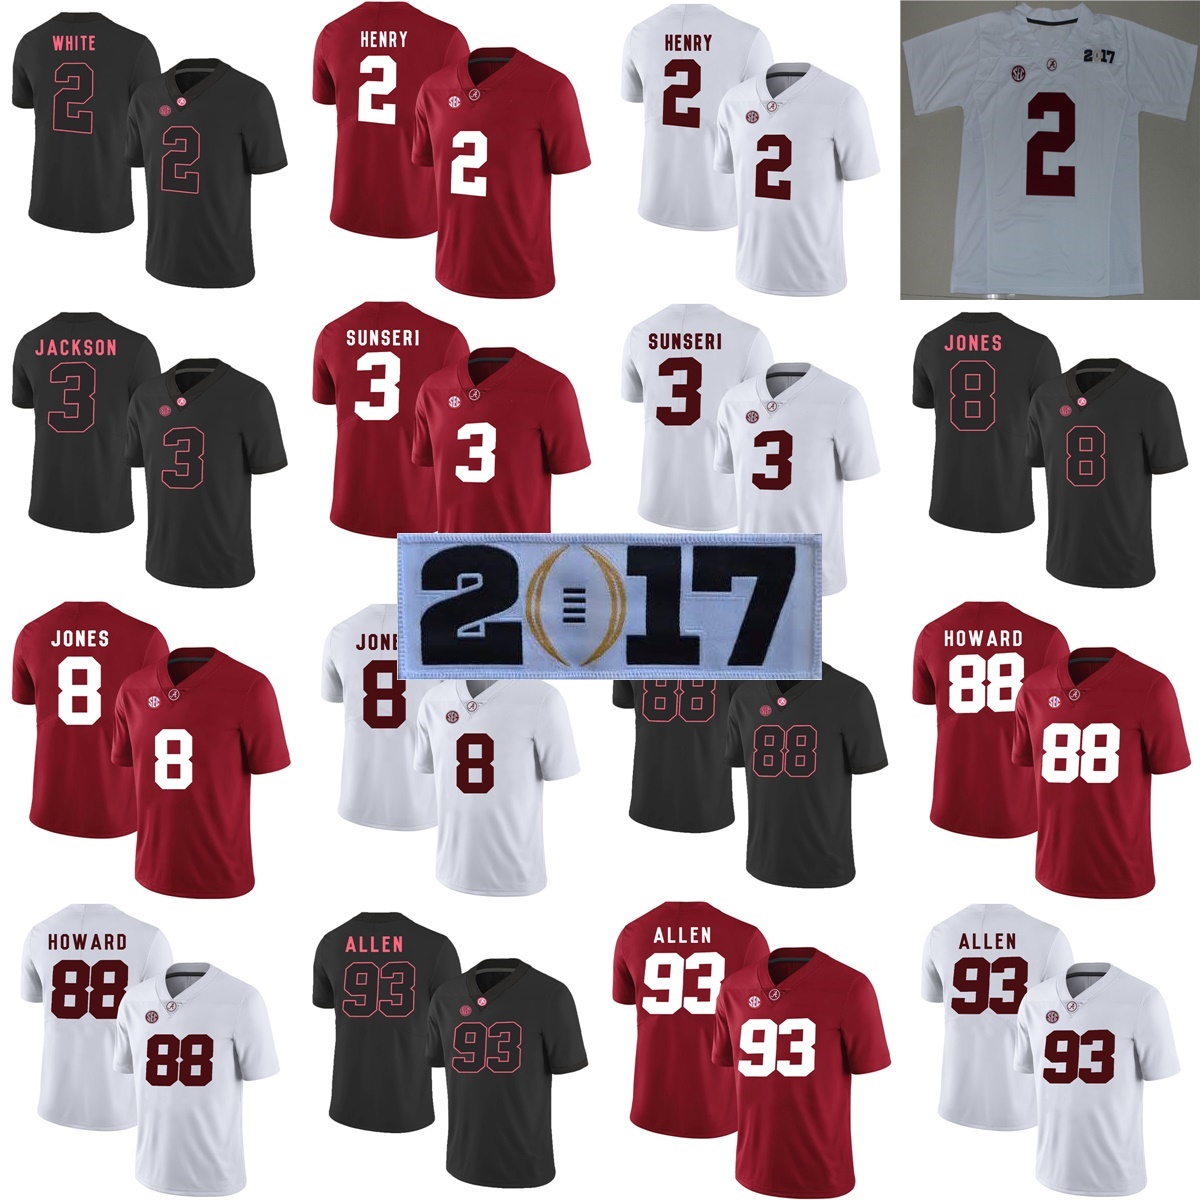 

2017 Alabama Crimson Tide College Football Jerseys 2 Jalen Hurts 3 Ridley Julio Jones Allen Cam Robinson 9 Bo Scarbrough OJ Howard Jerseys, #8 red